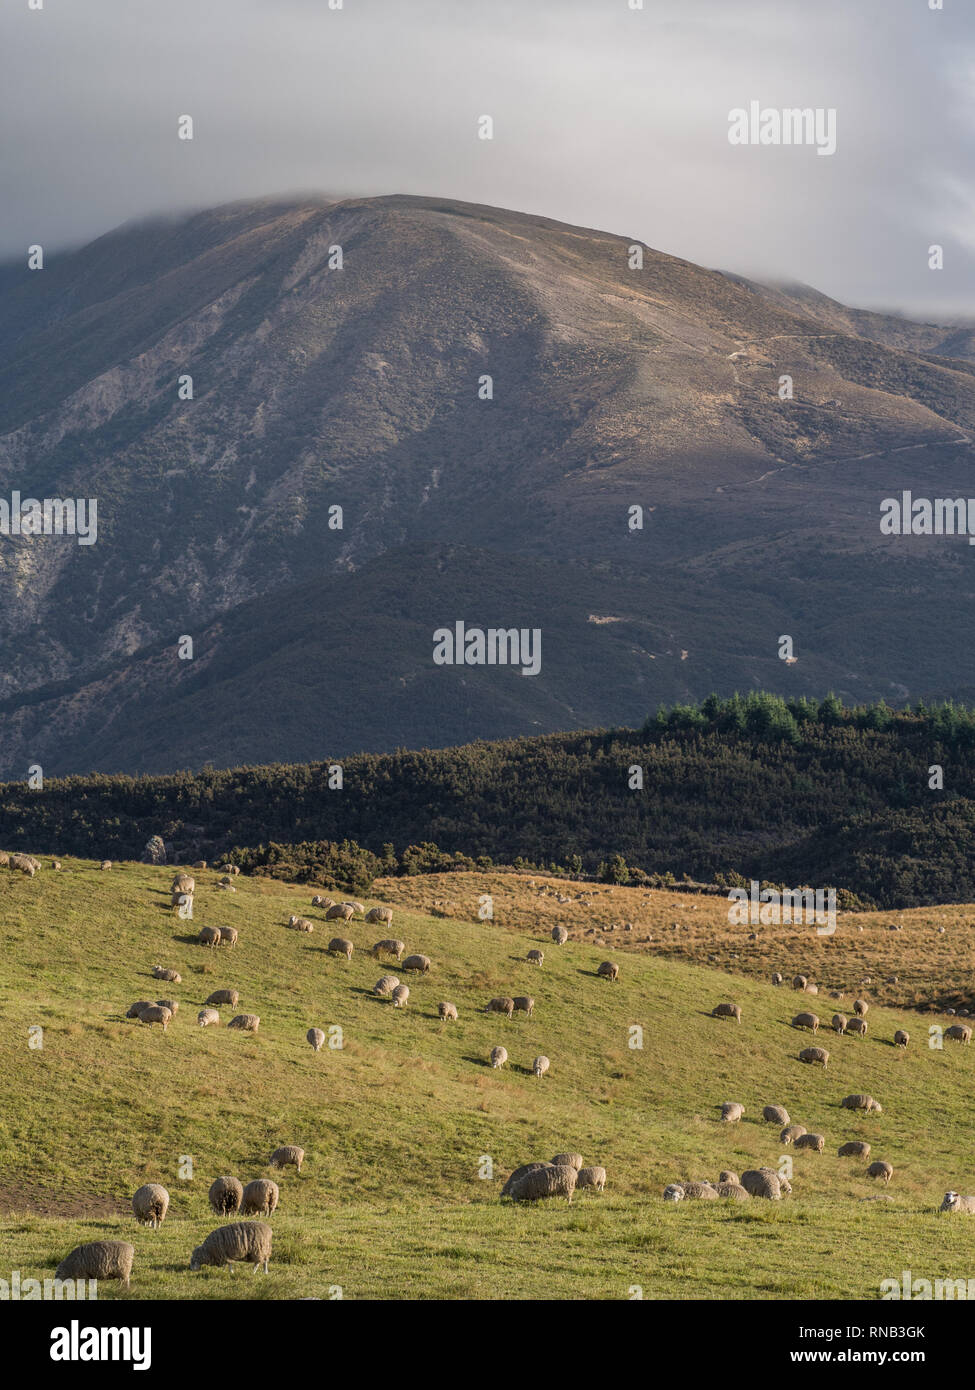 Sheep grazing, view toward Otupae Range from Taihape Napier Road, Inland Mokai Patea, Central North Island, New Zealand Stock Photo